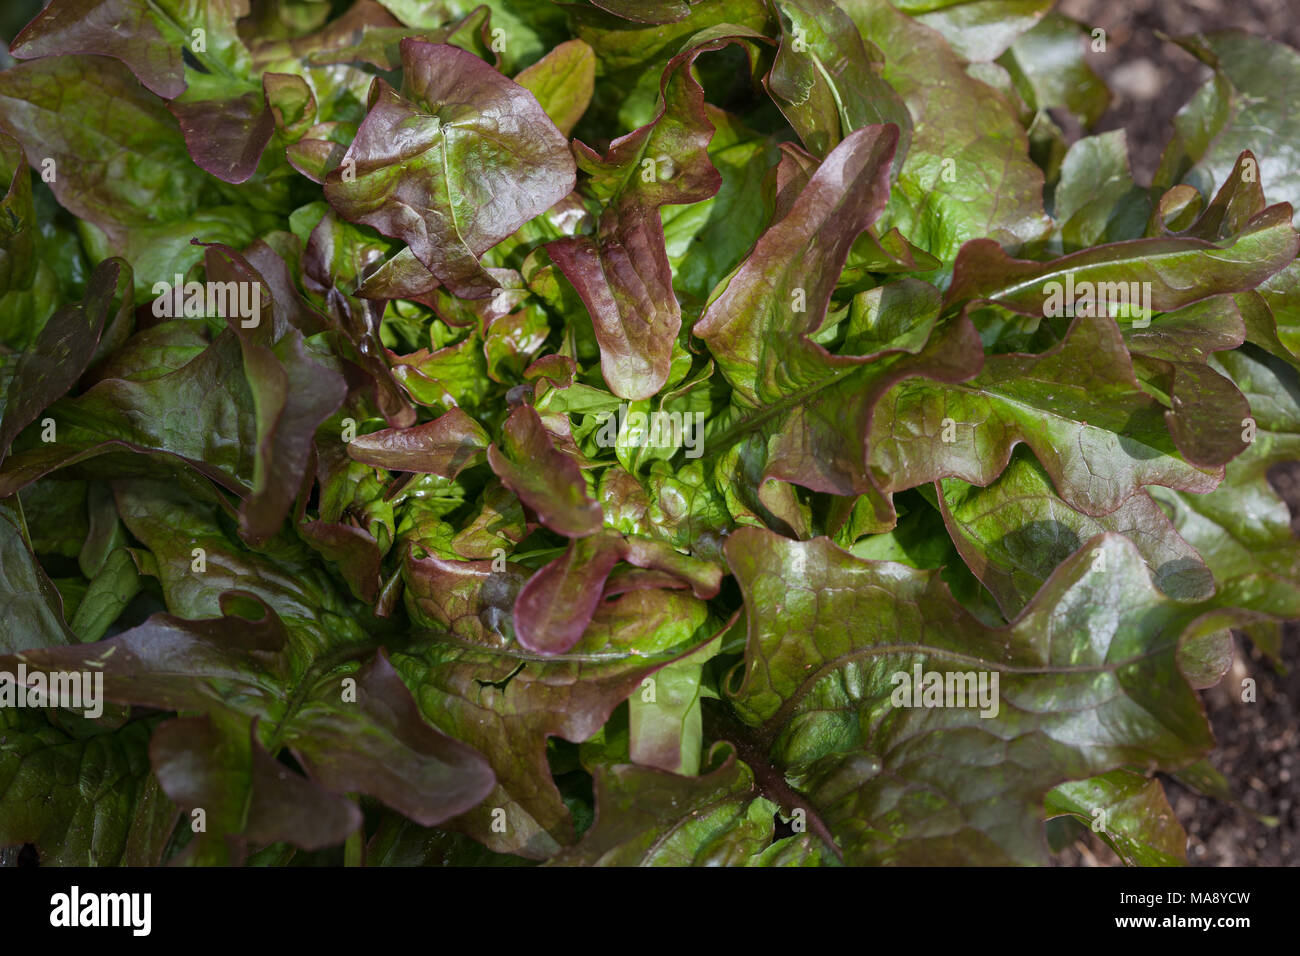 'Mohikan' Lettuce, Huvudsallat (Lactuca sativa var. capitata crispum) Stock Photo